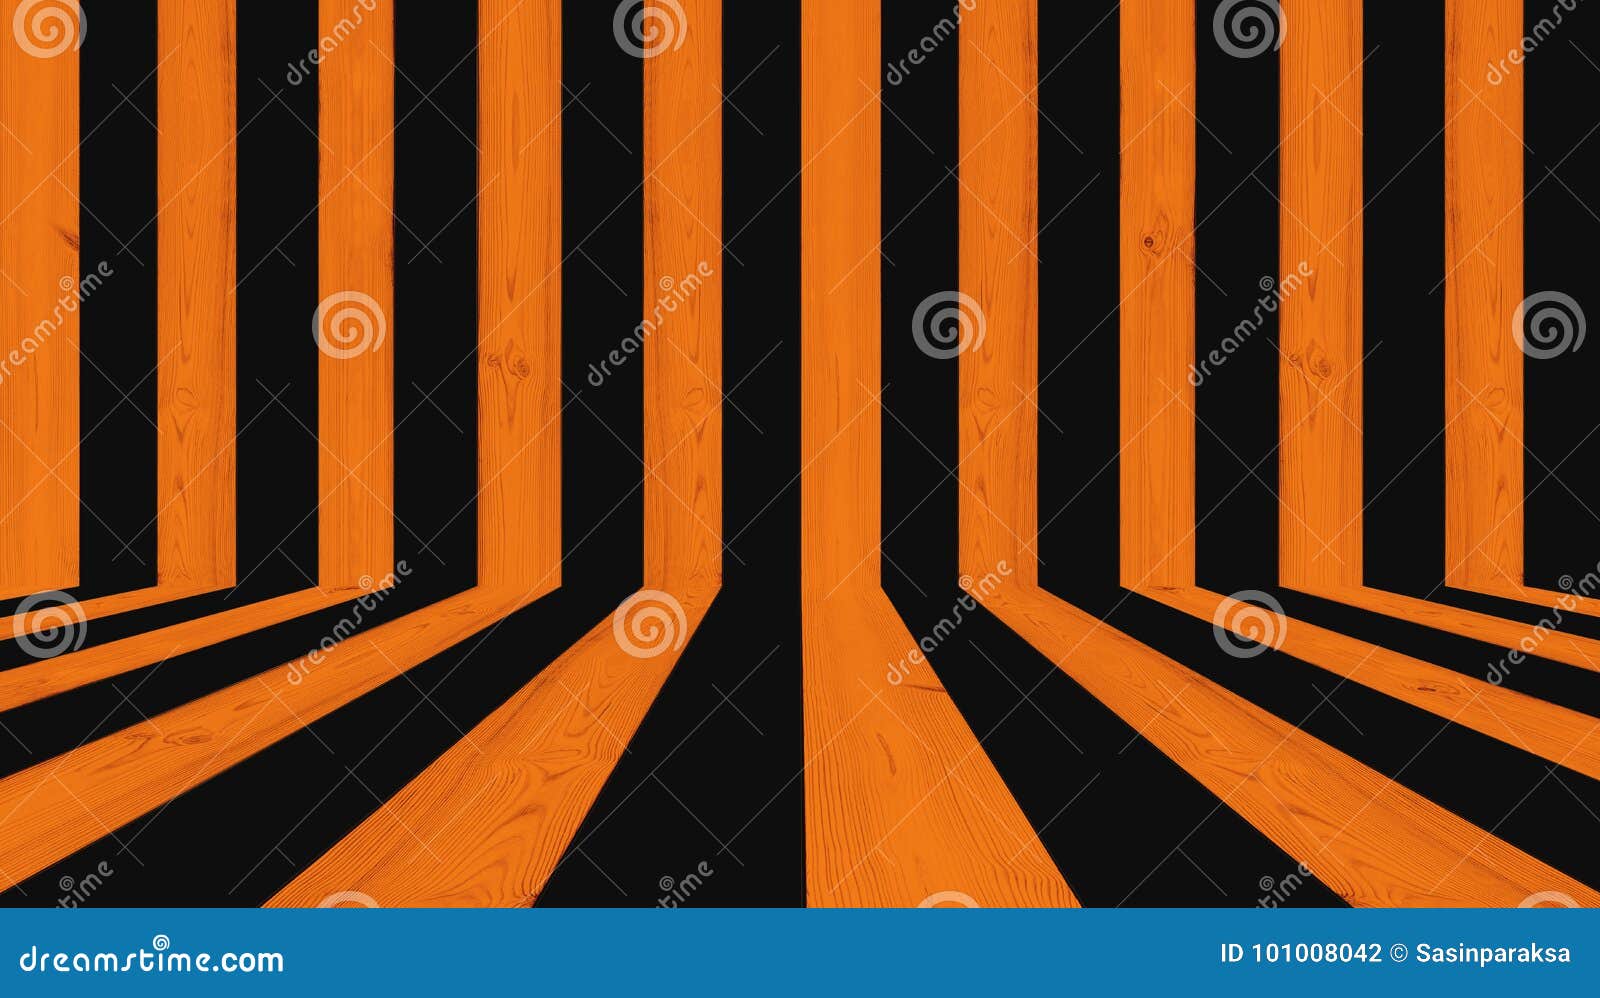 wood texture background, stripe black and orange for halloween background